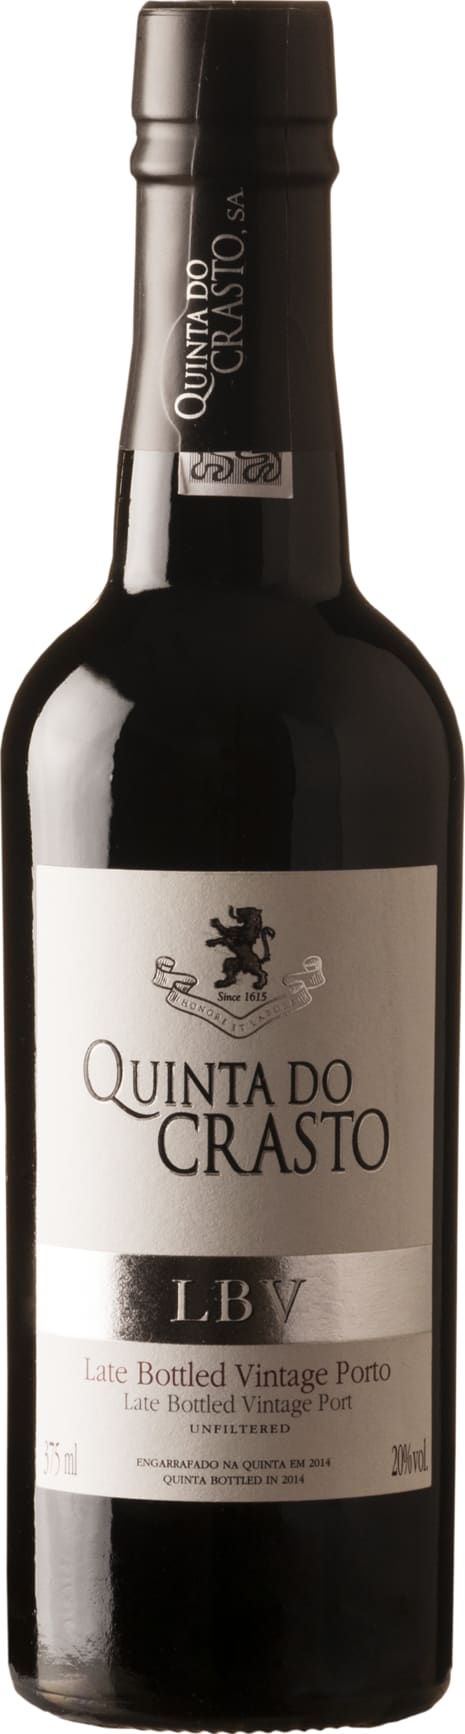 Quinta Do Crasto LBV Port 2017 6x75cl - Just Wines 